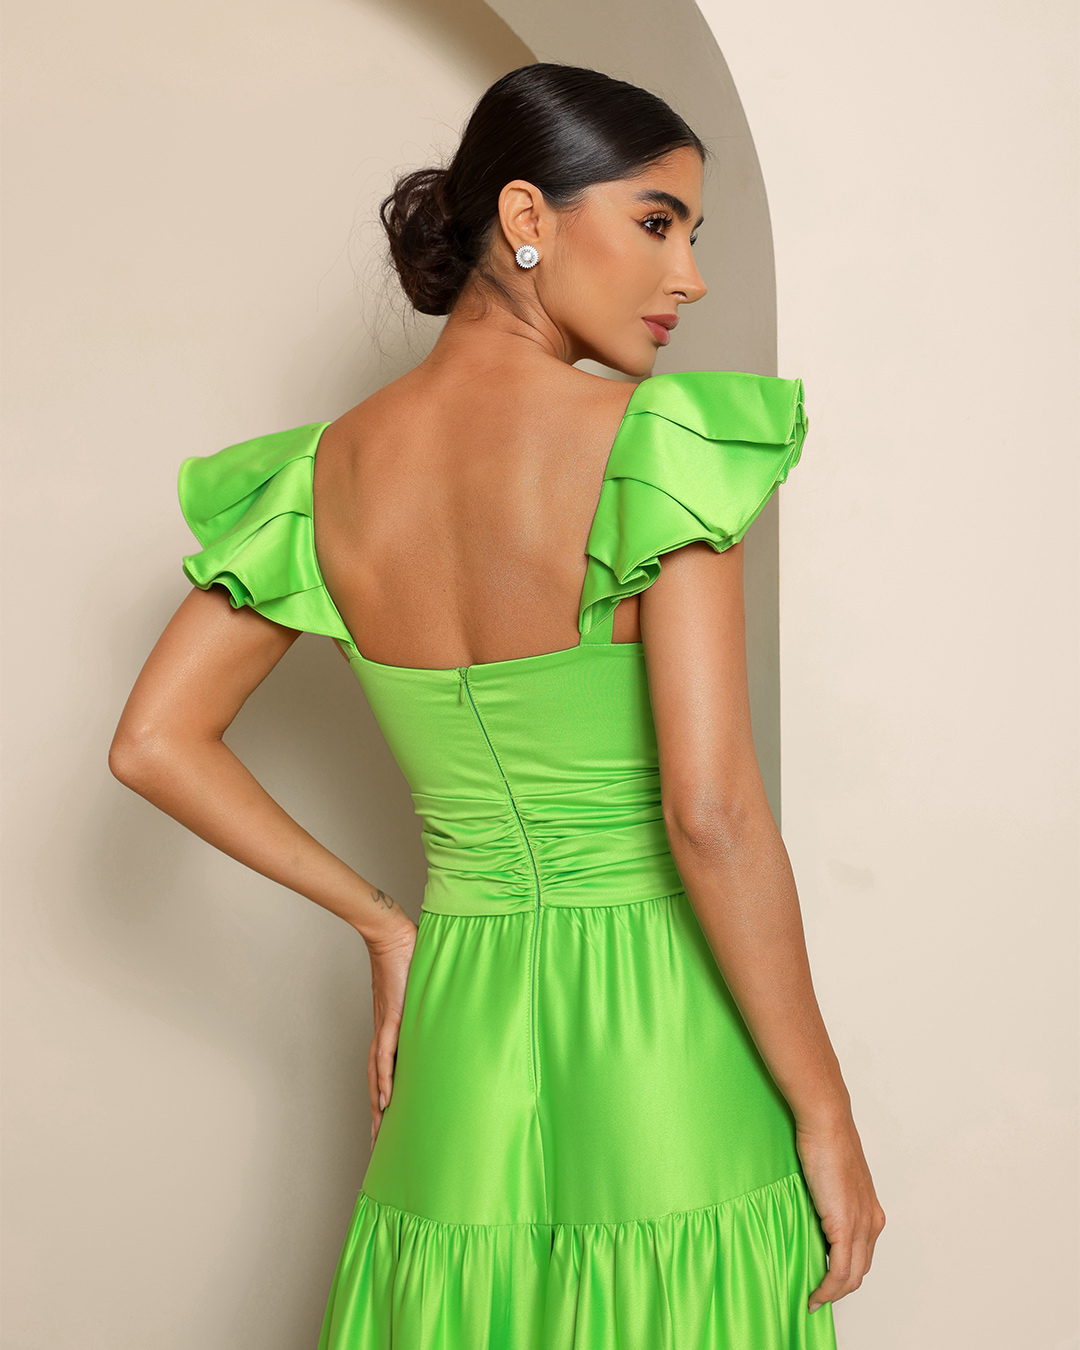 Dot Clothing - Vestido Dot Clothing Longo Acetinado Verde - 1855VERDE